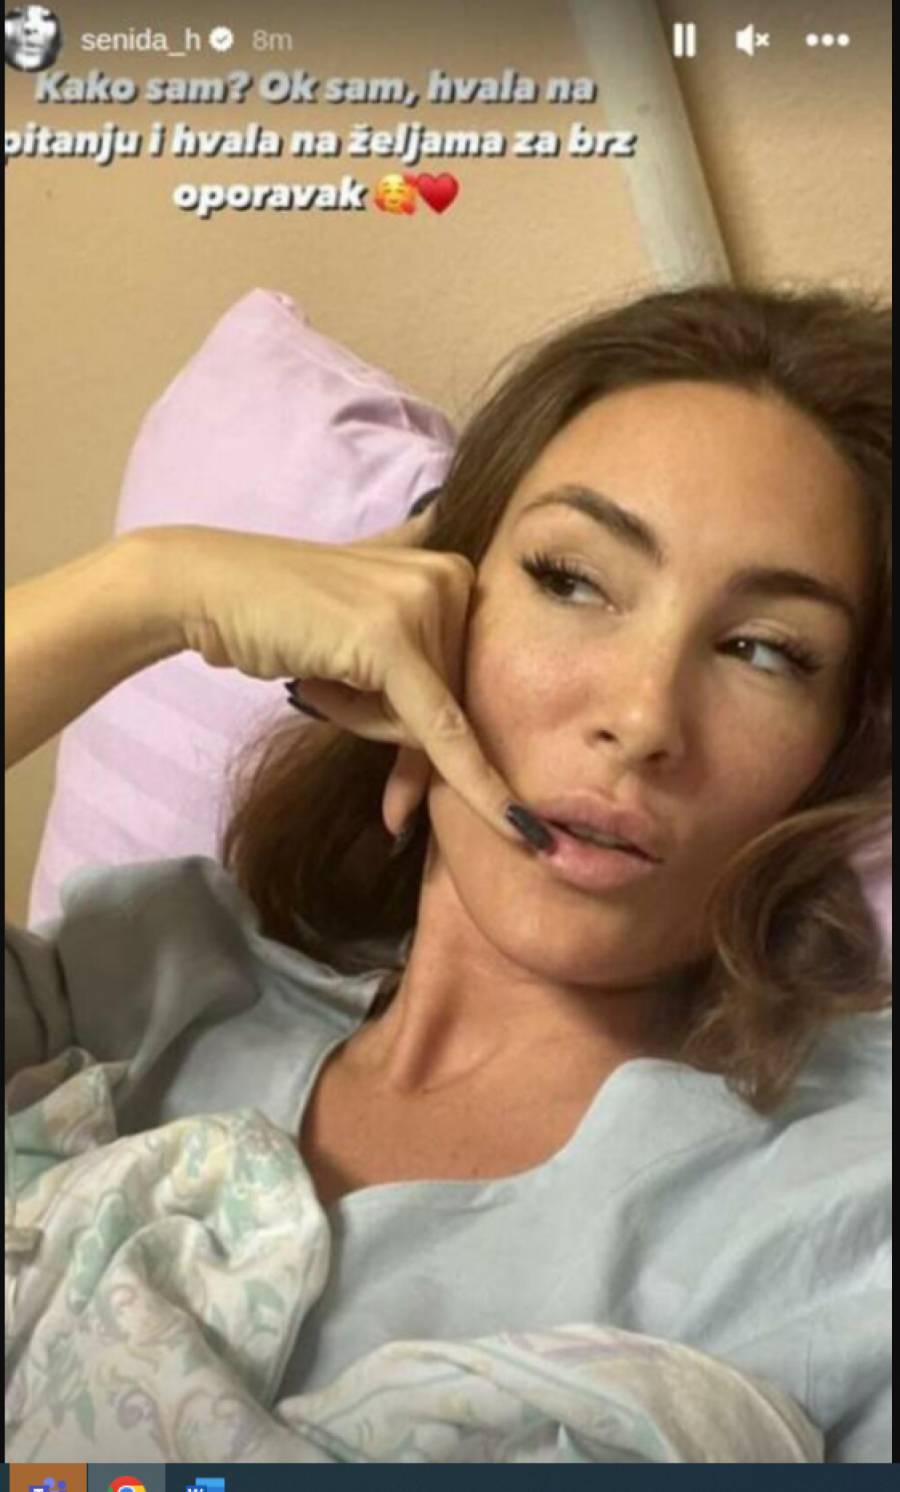 OGLASILA SE IZ BOLNICE Senidah završila na infuziji, a sada je pevačica iz bolničke sobe fanovima poručila OVO (FOTO)